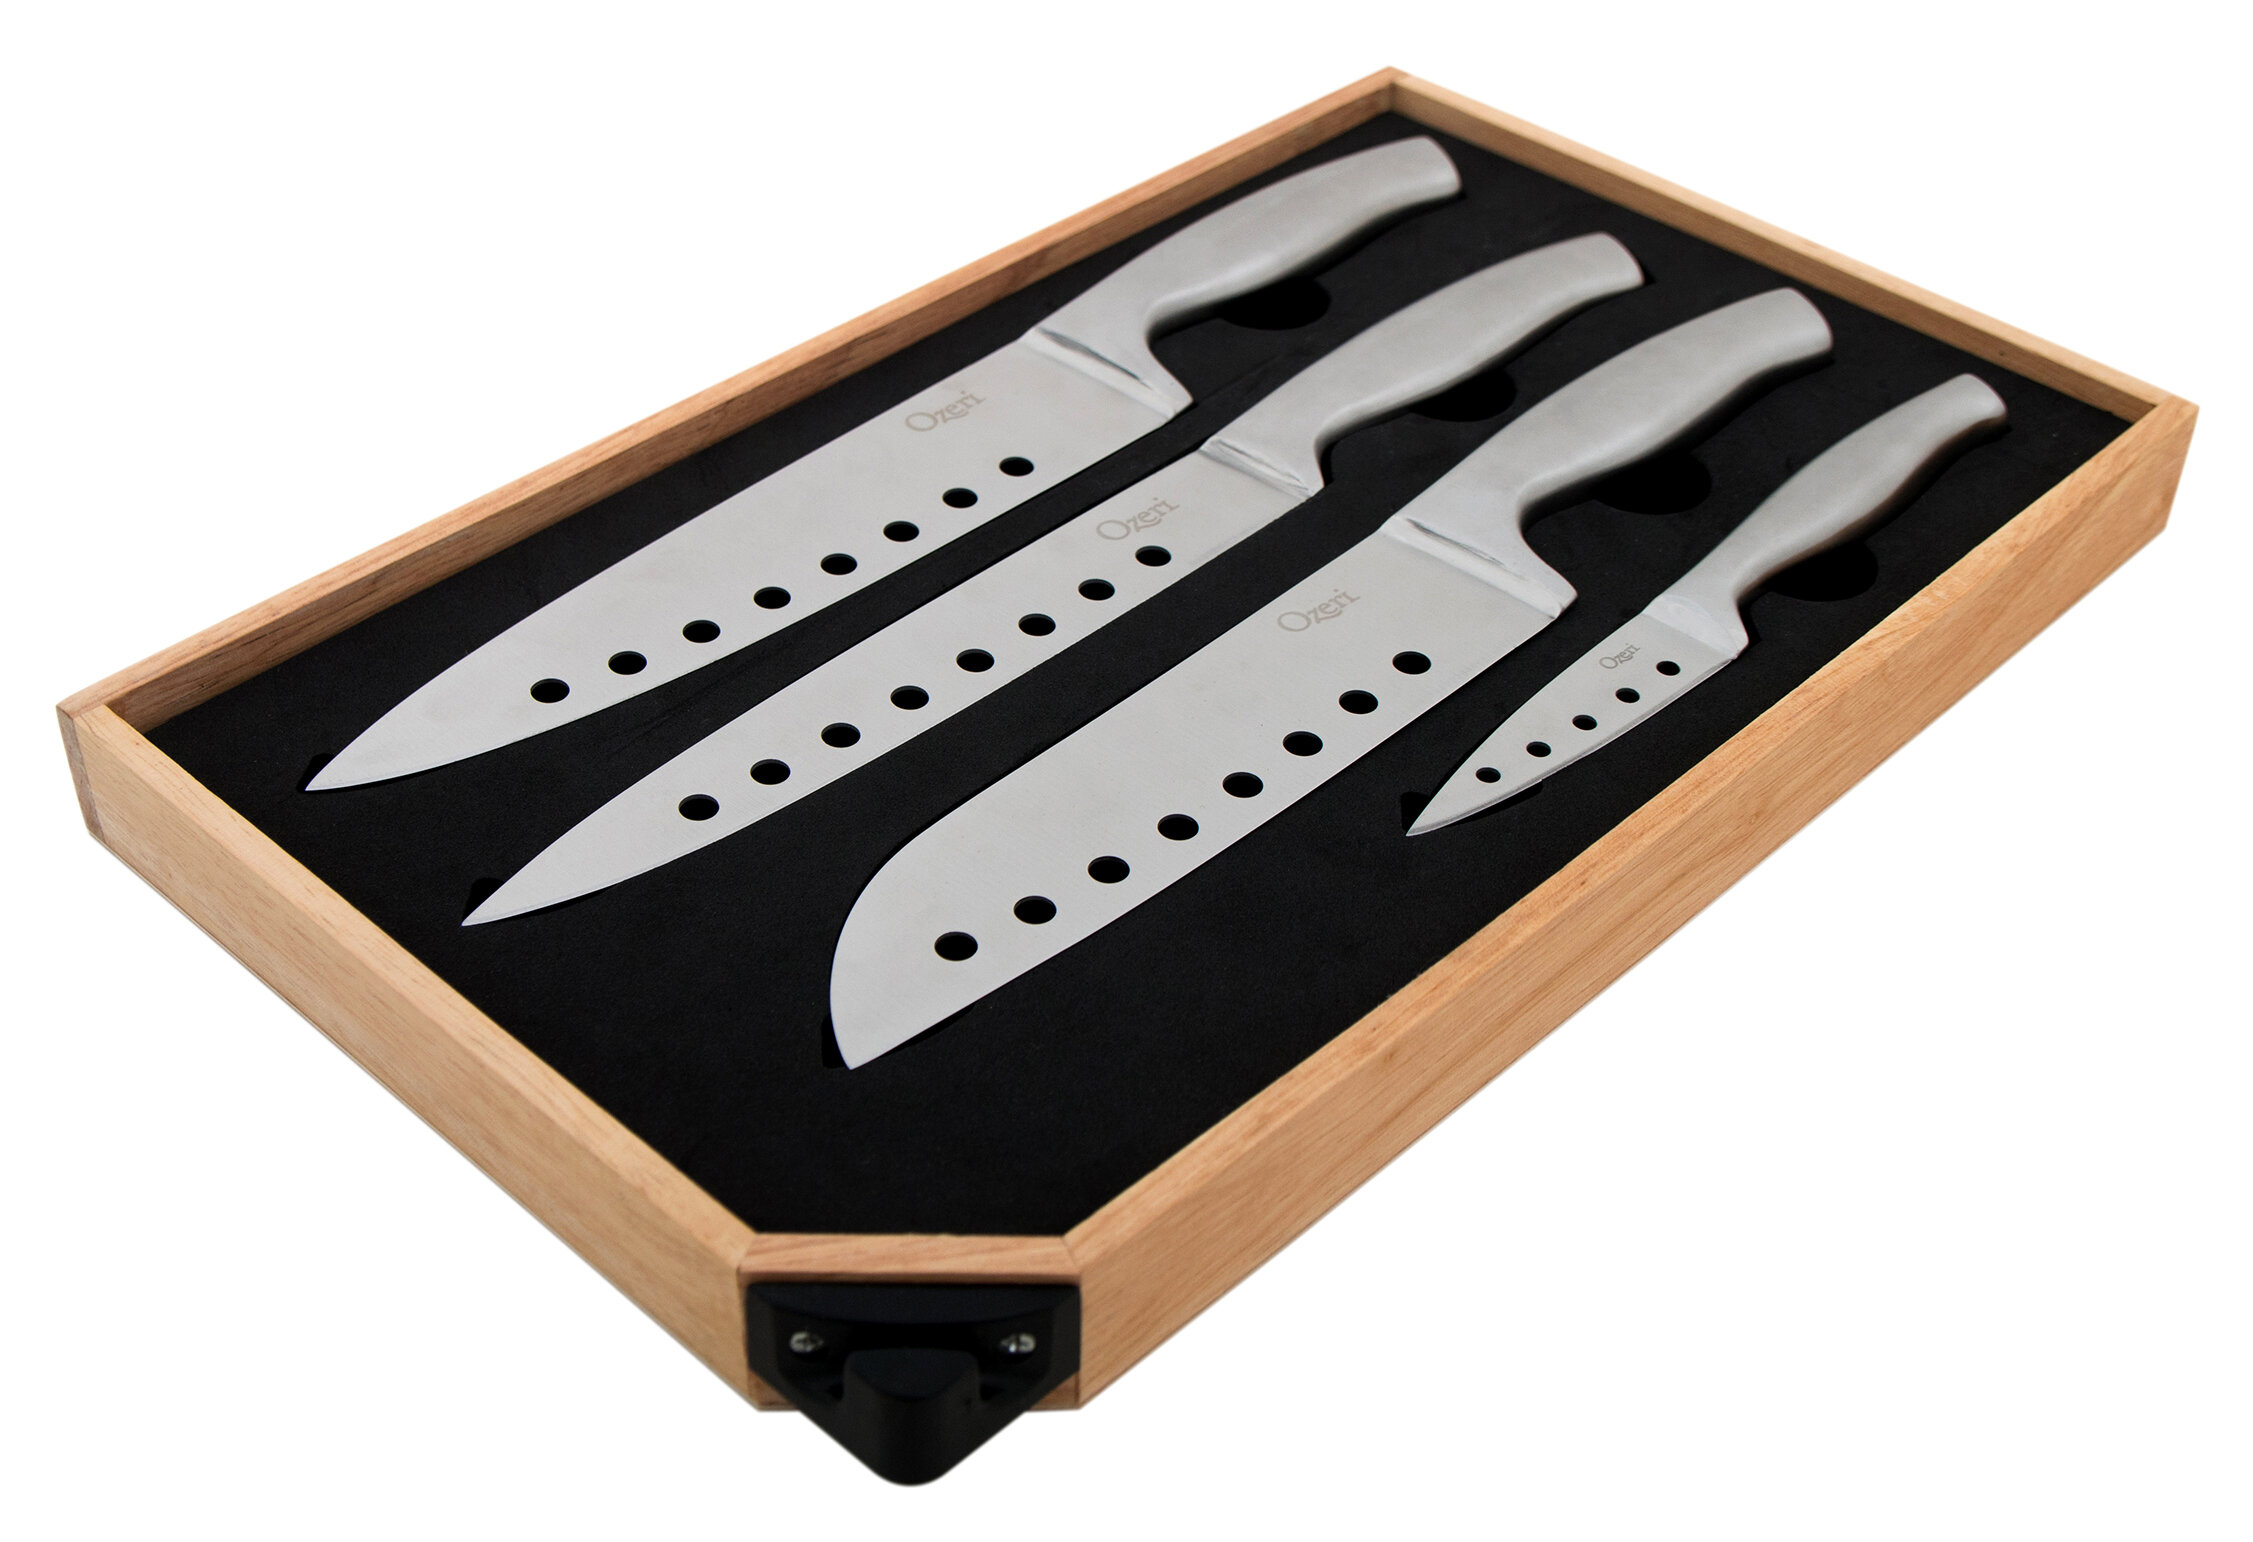  Yatoshi 7 Piece White Knife Set - Pro Kitchen Knife Set Ultra  Sharp High Carbon Stainless Steel with Ergonomic Handle: Home & Kitchen